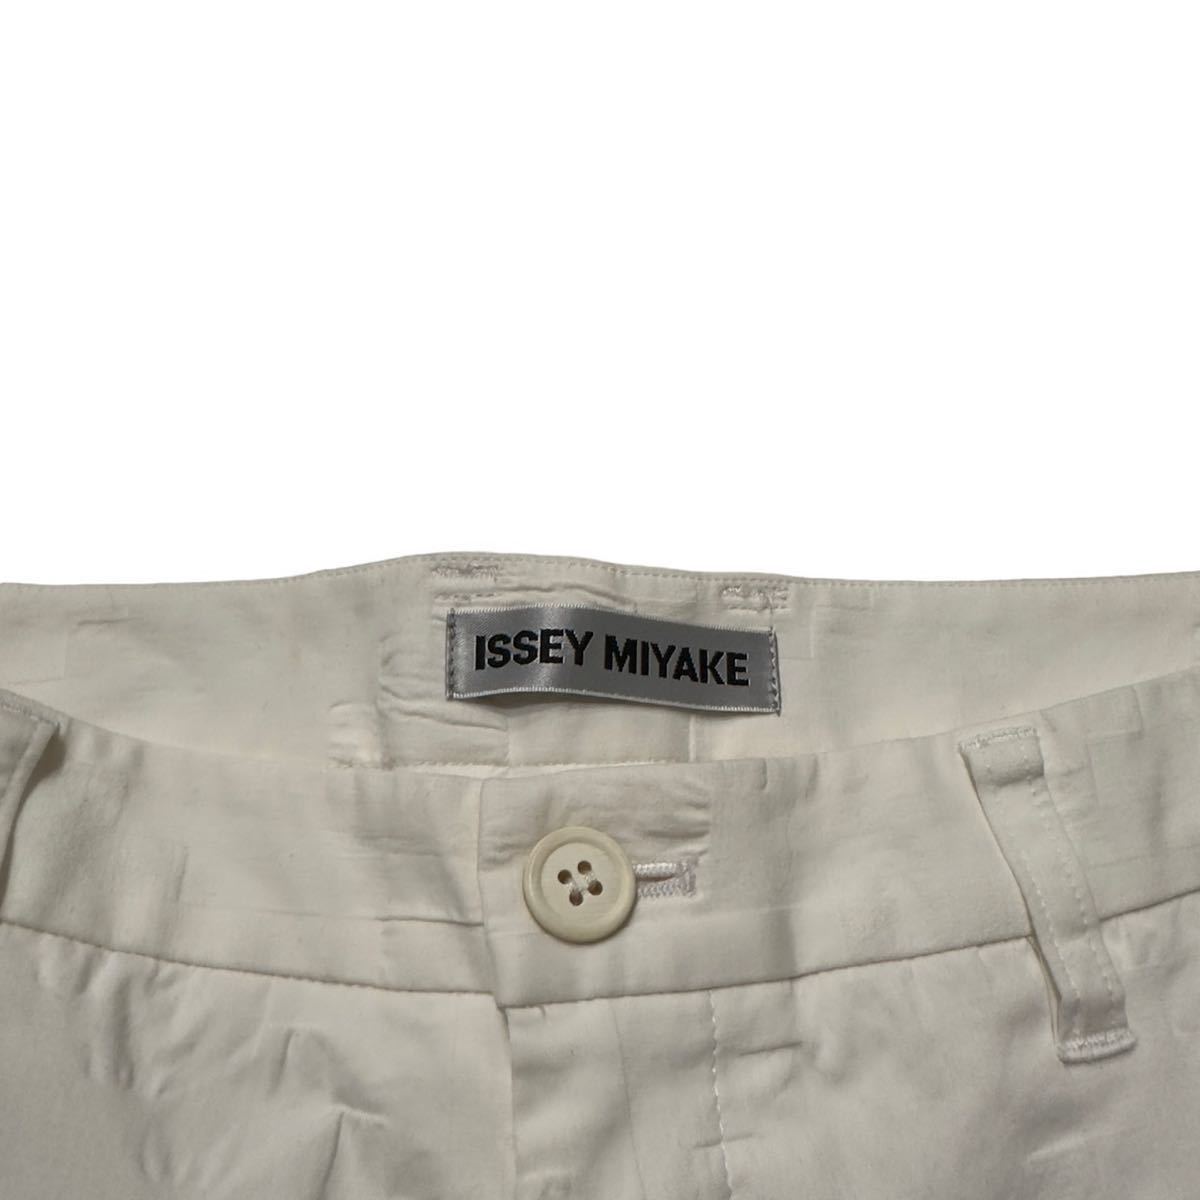 Rare ISSEY MIYAKE 2000AW 3D patterned pants archive comme des garcons yohji yamamoto rei kawakubo white japanese label_画像4